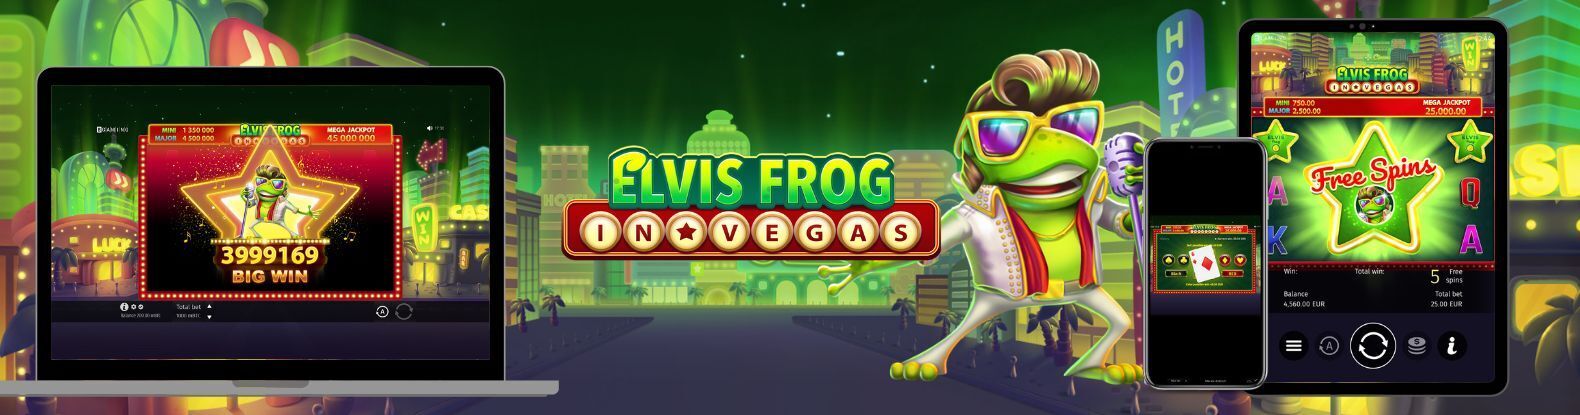 Elvis Frog in Vegas Mobile Image